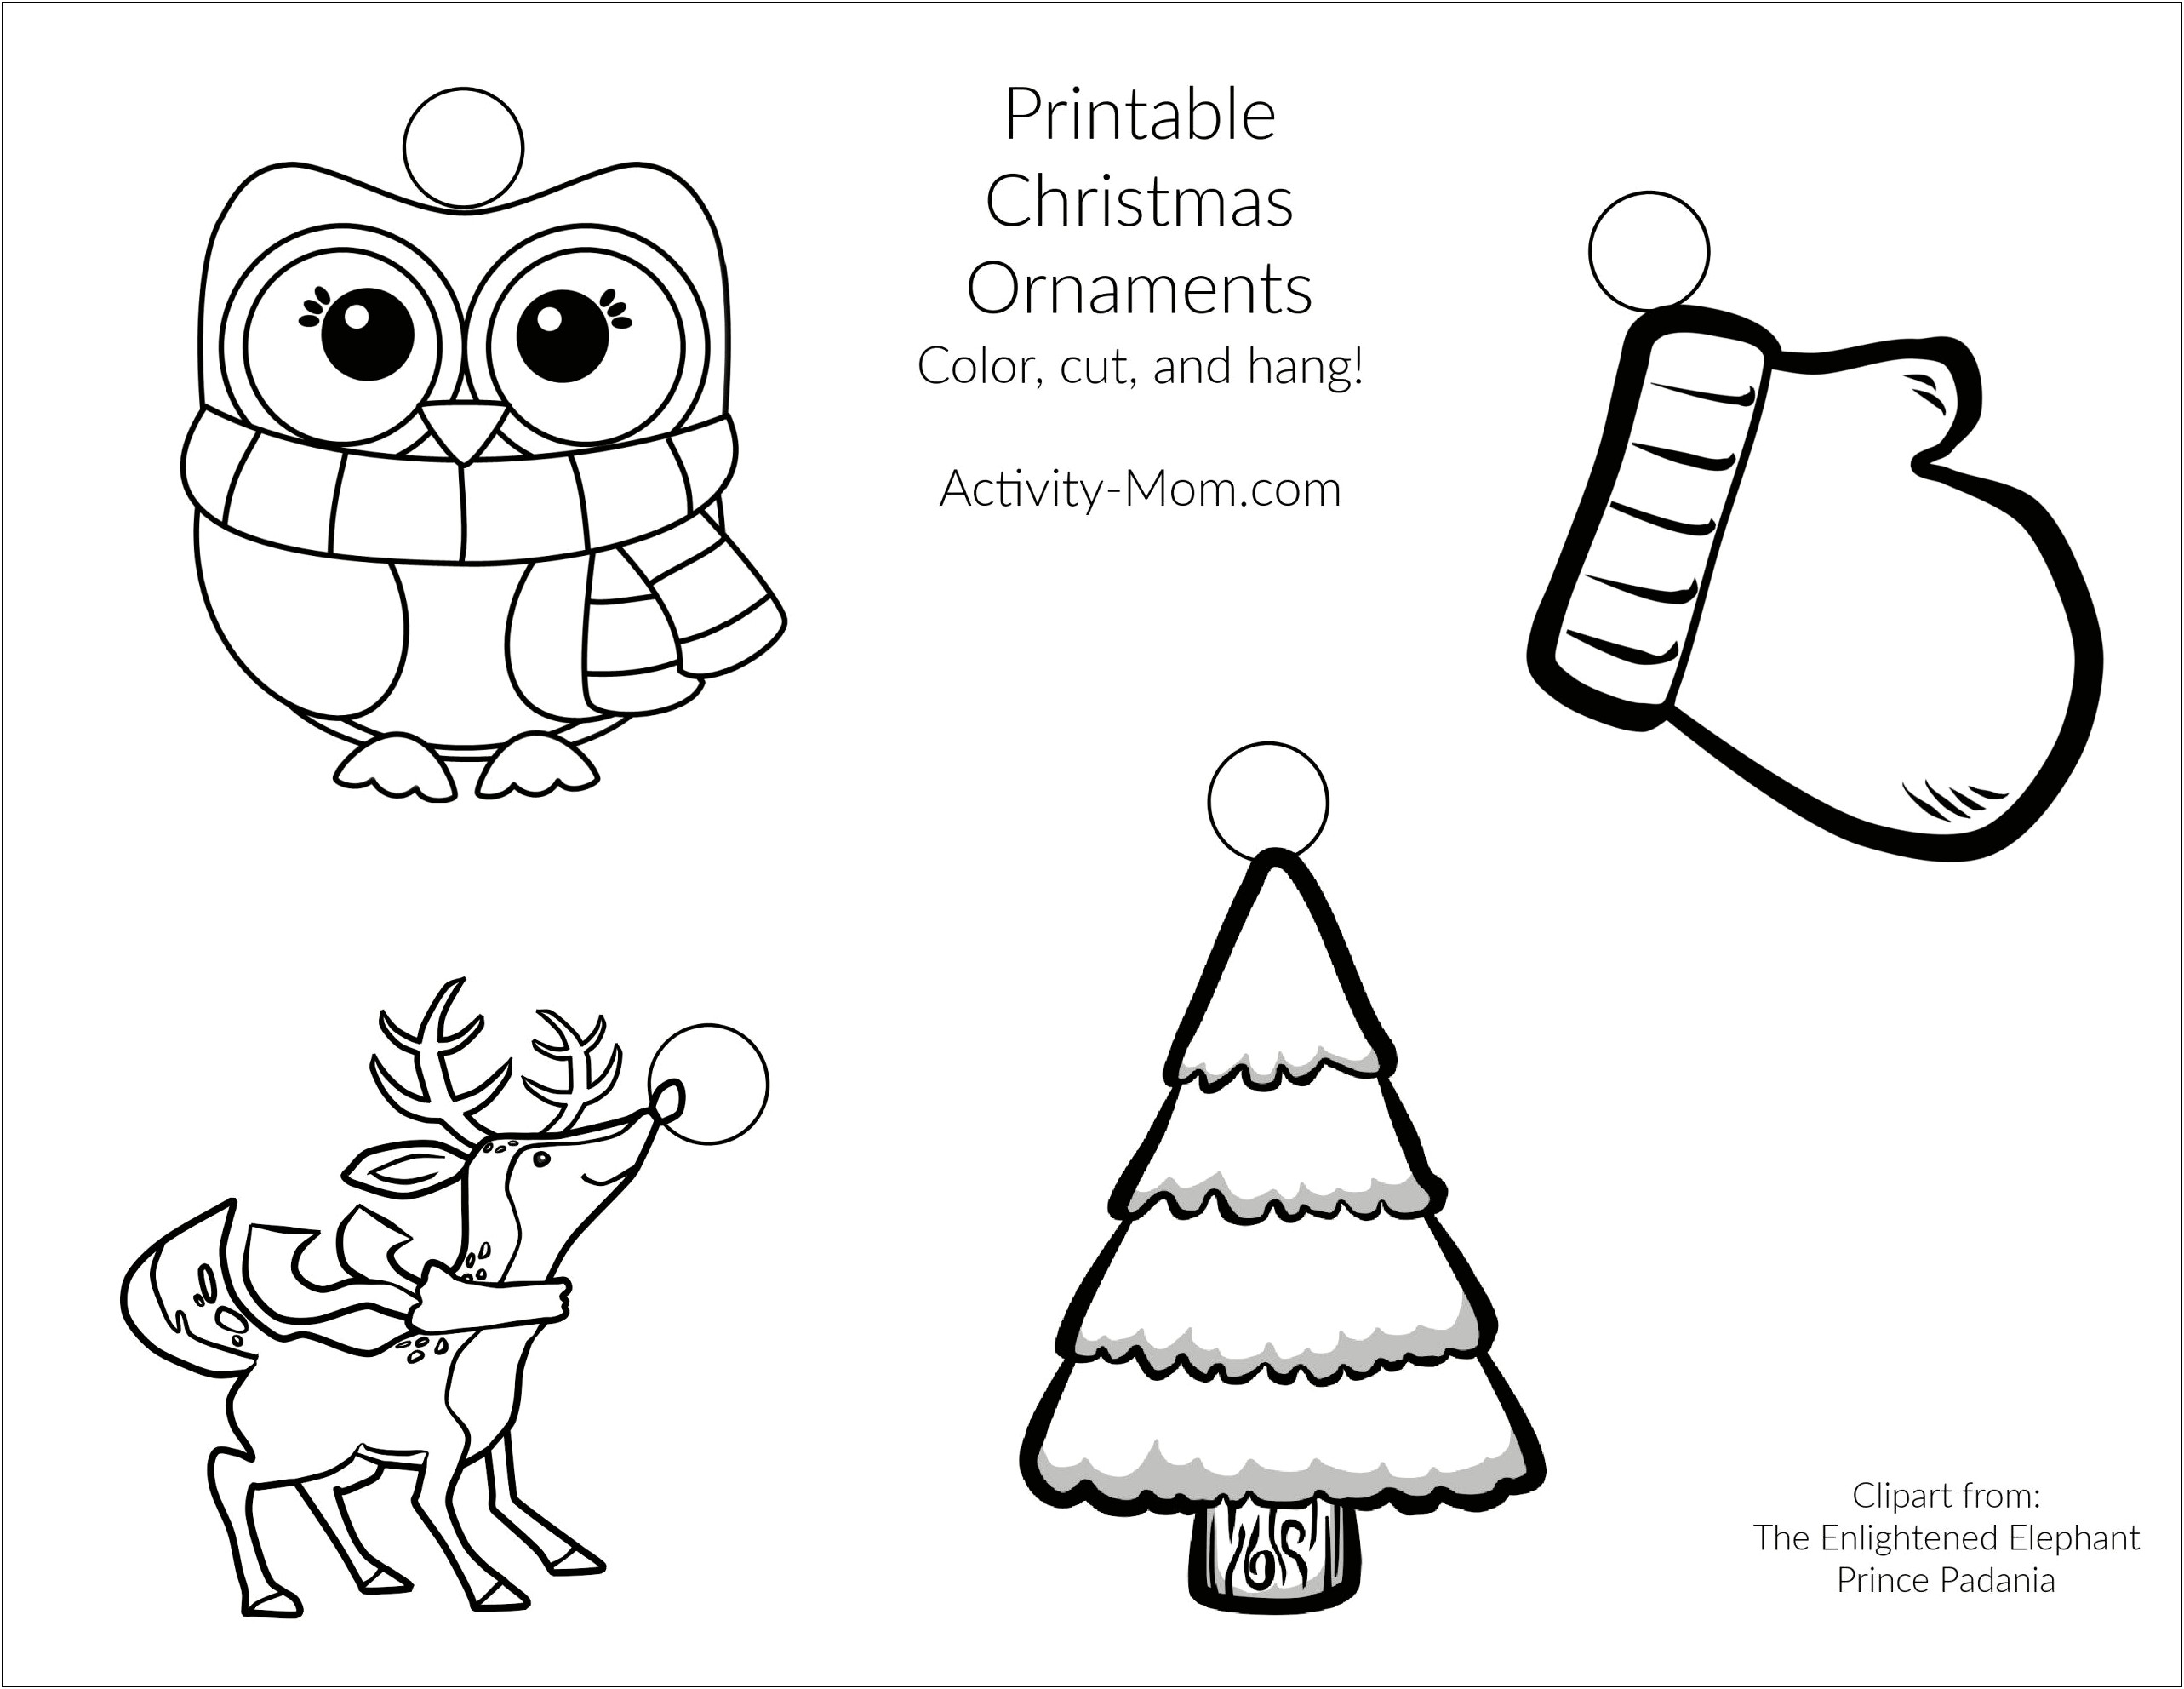 Free Printable Templates For Christmas Ornaments